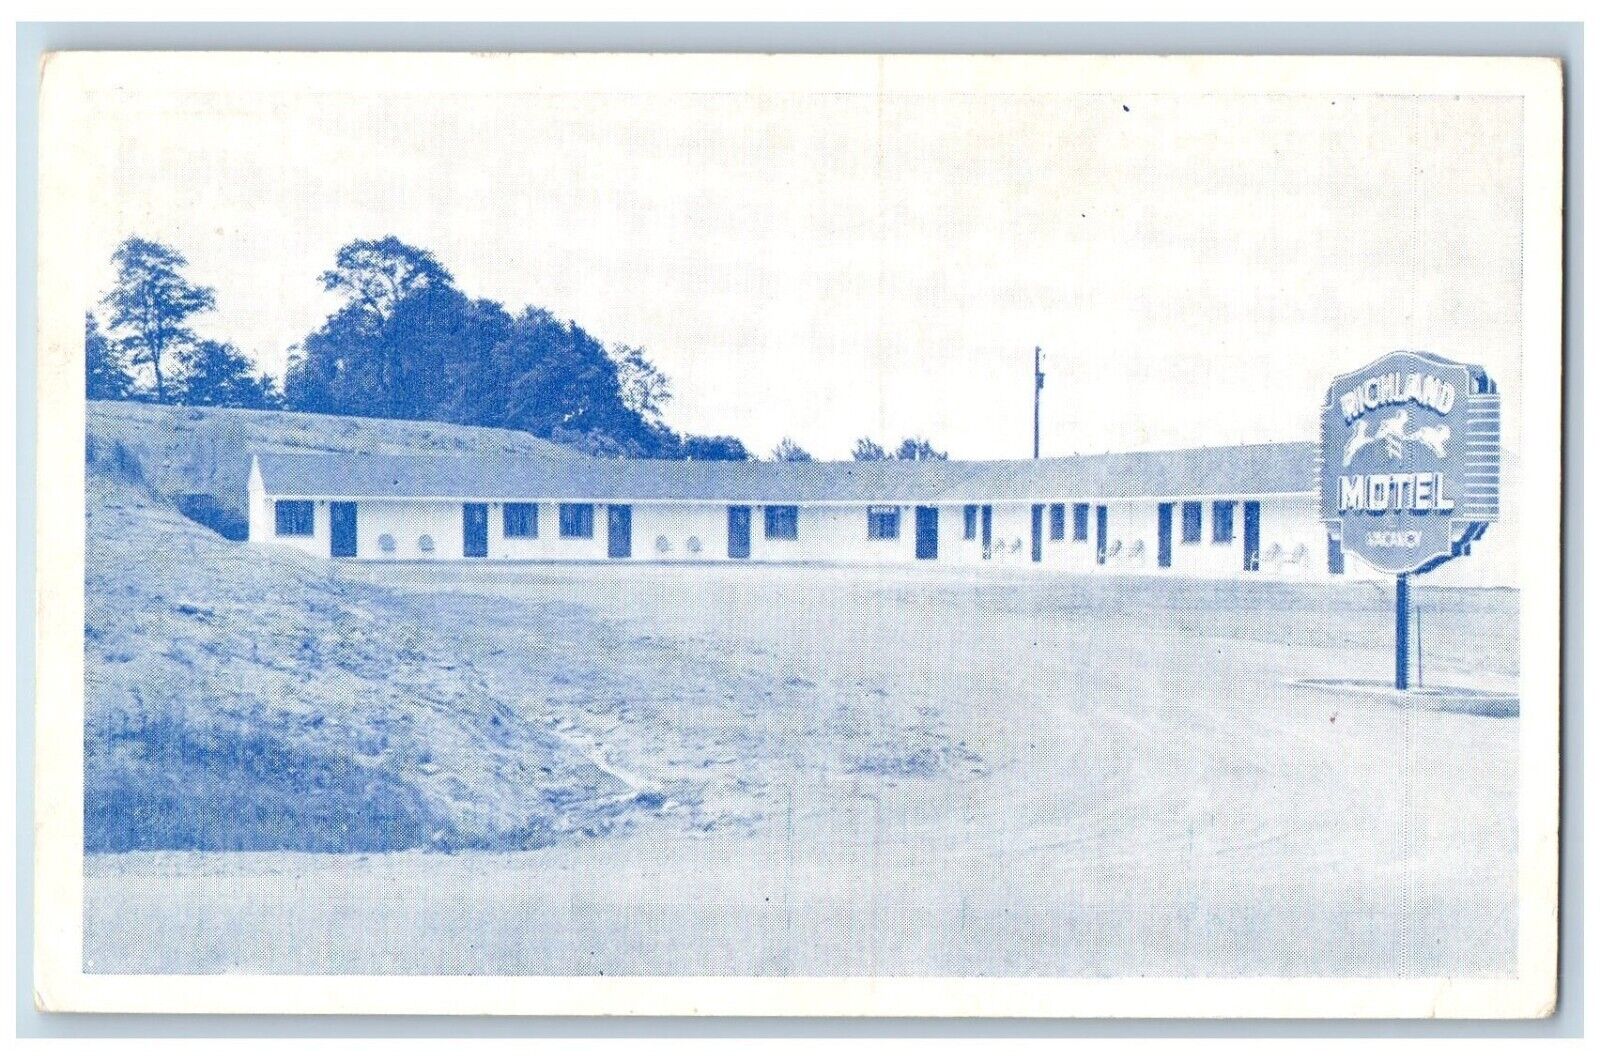 St. Clairsville Ohio OH Postcard Richland Motel Exterior Building c1940 Vintage